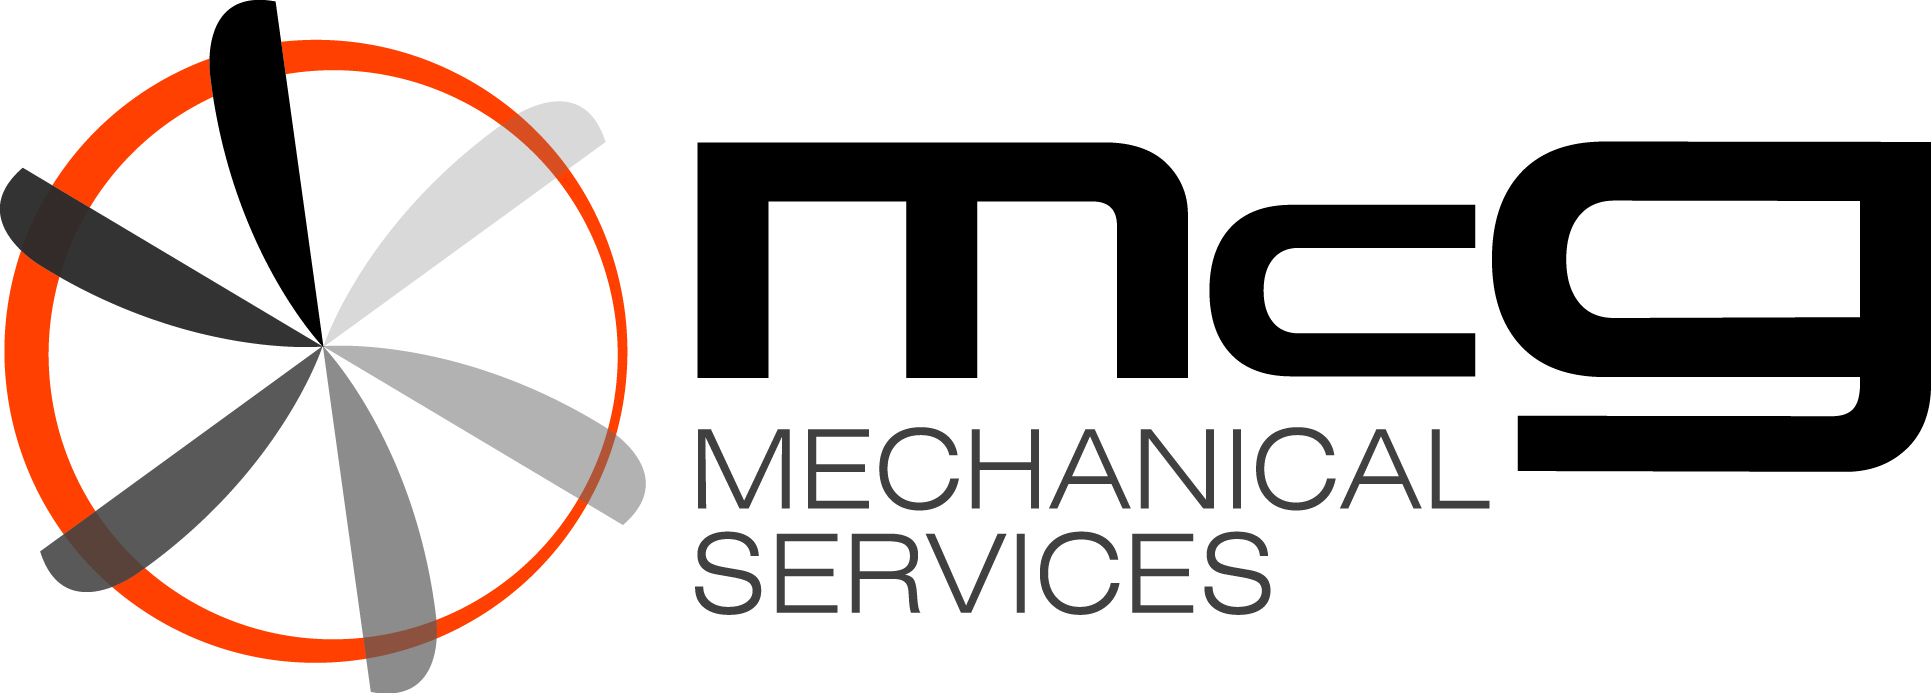 MCG Mechanical Services, Inc Logo